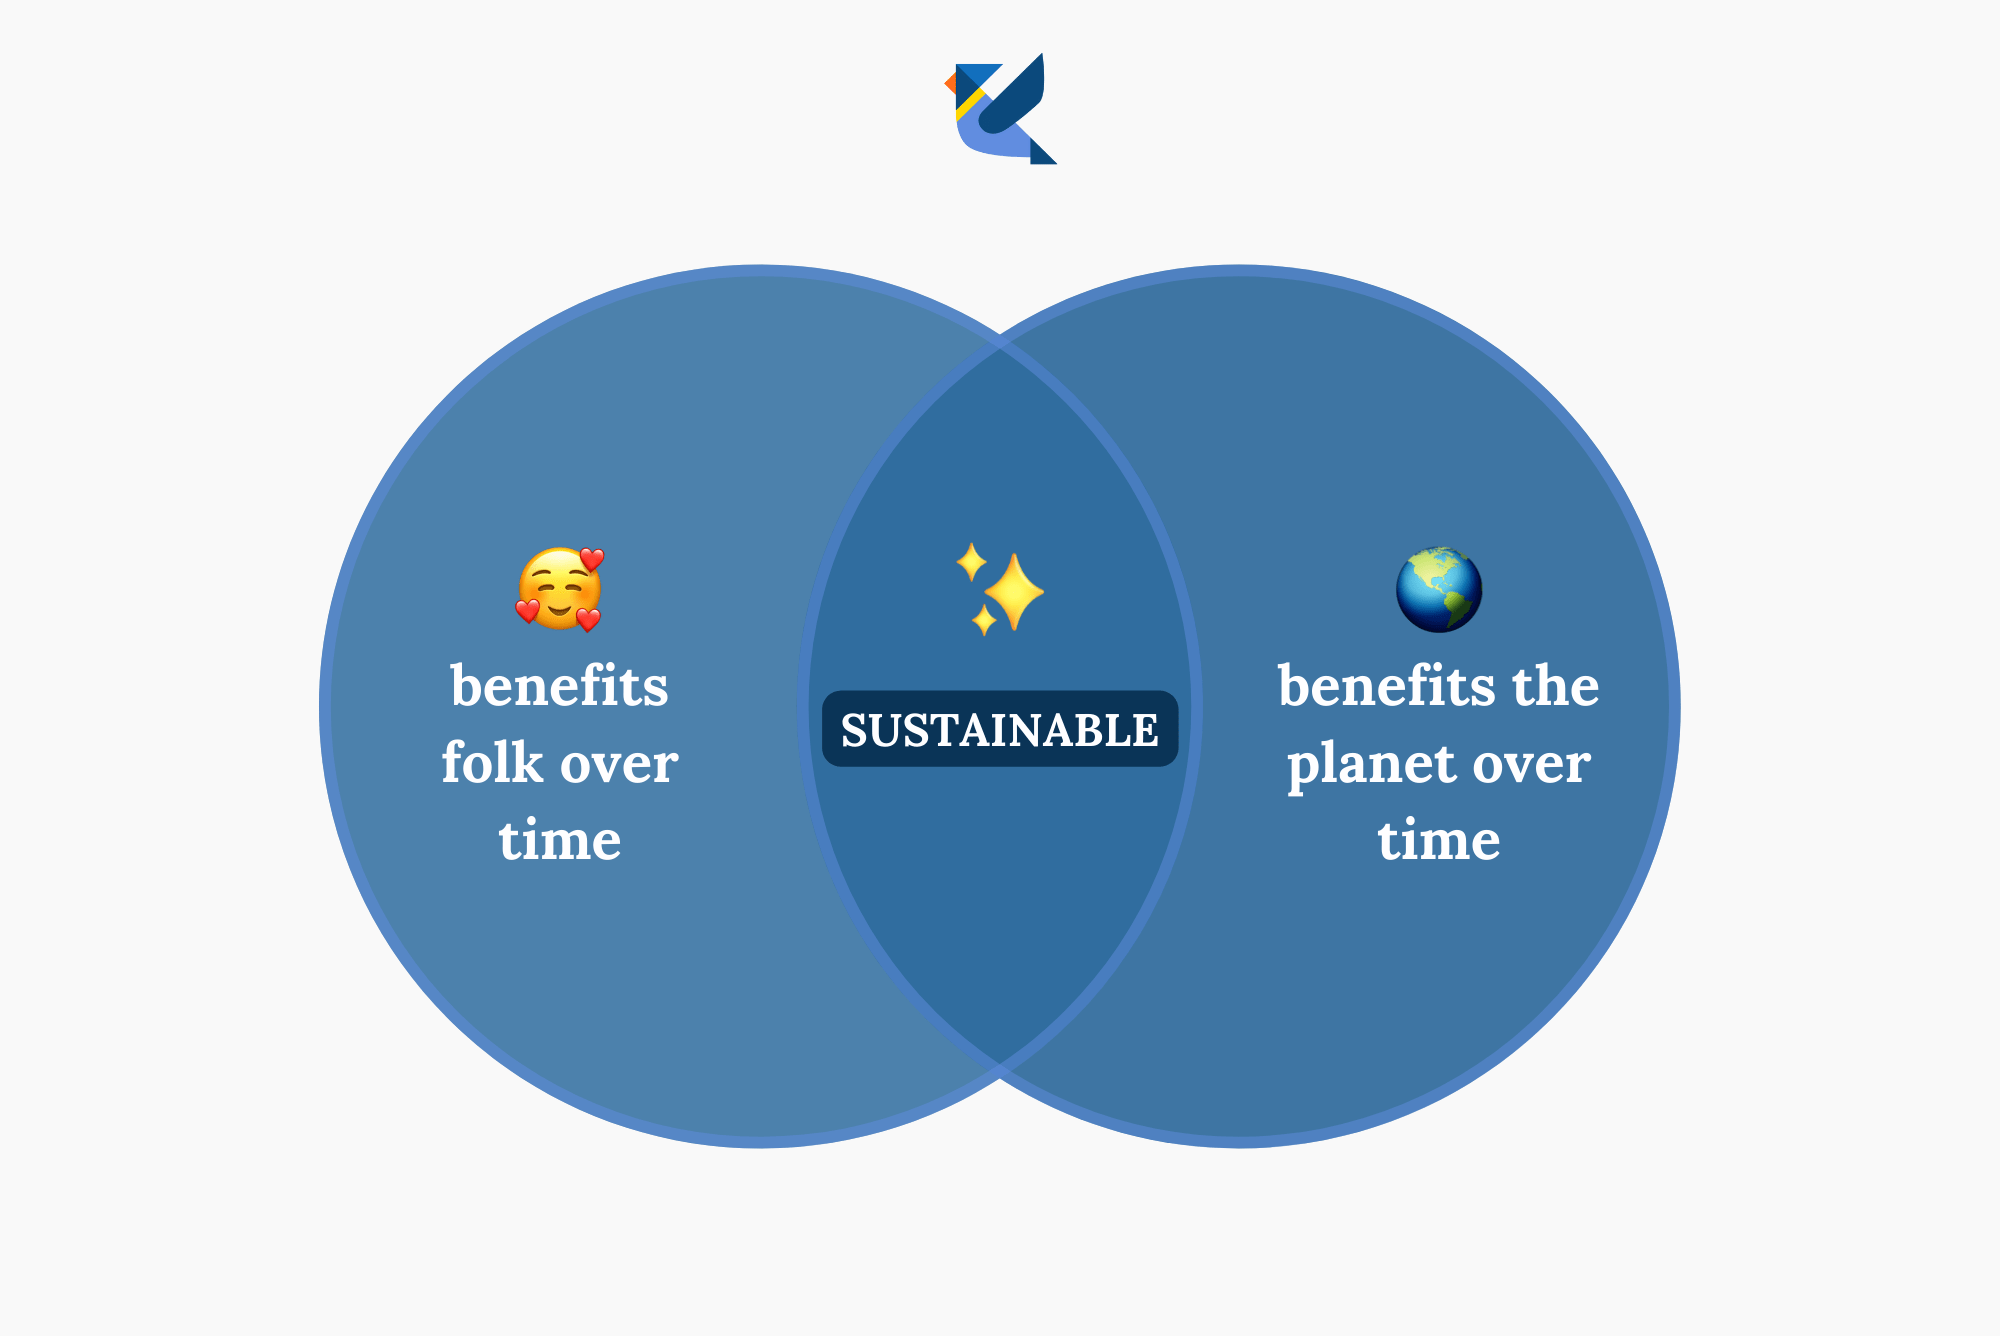 What does sustainability mean venn diagram